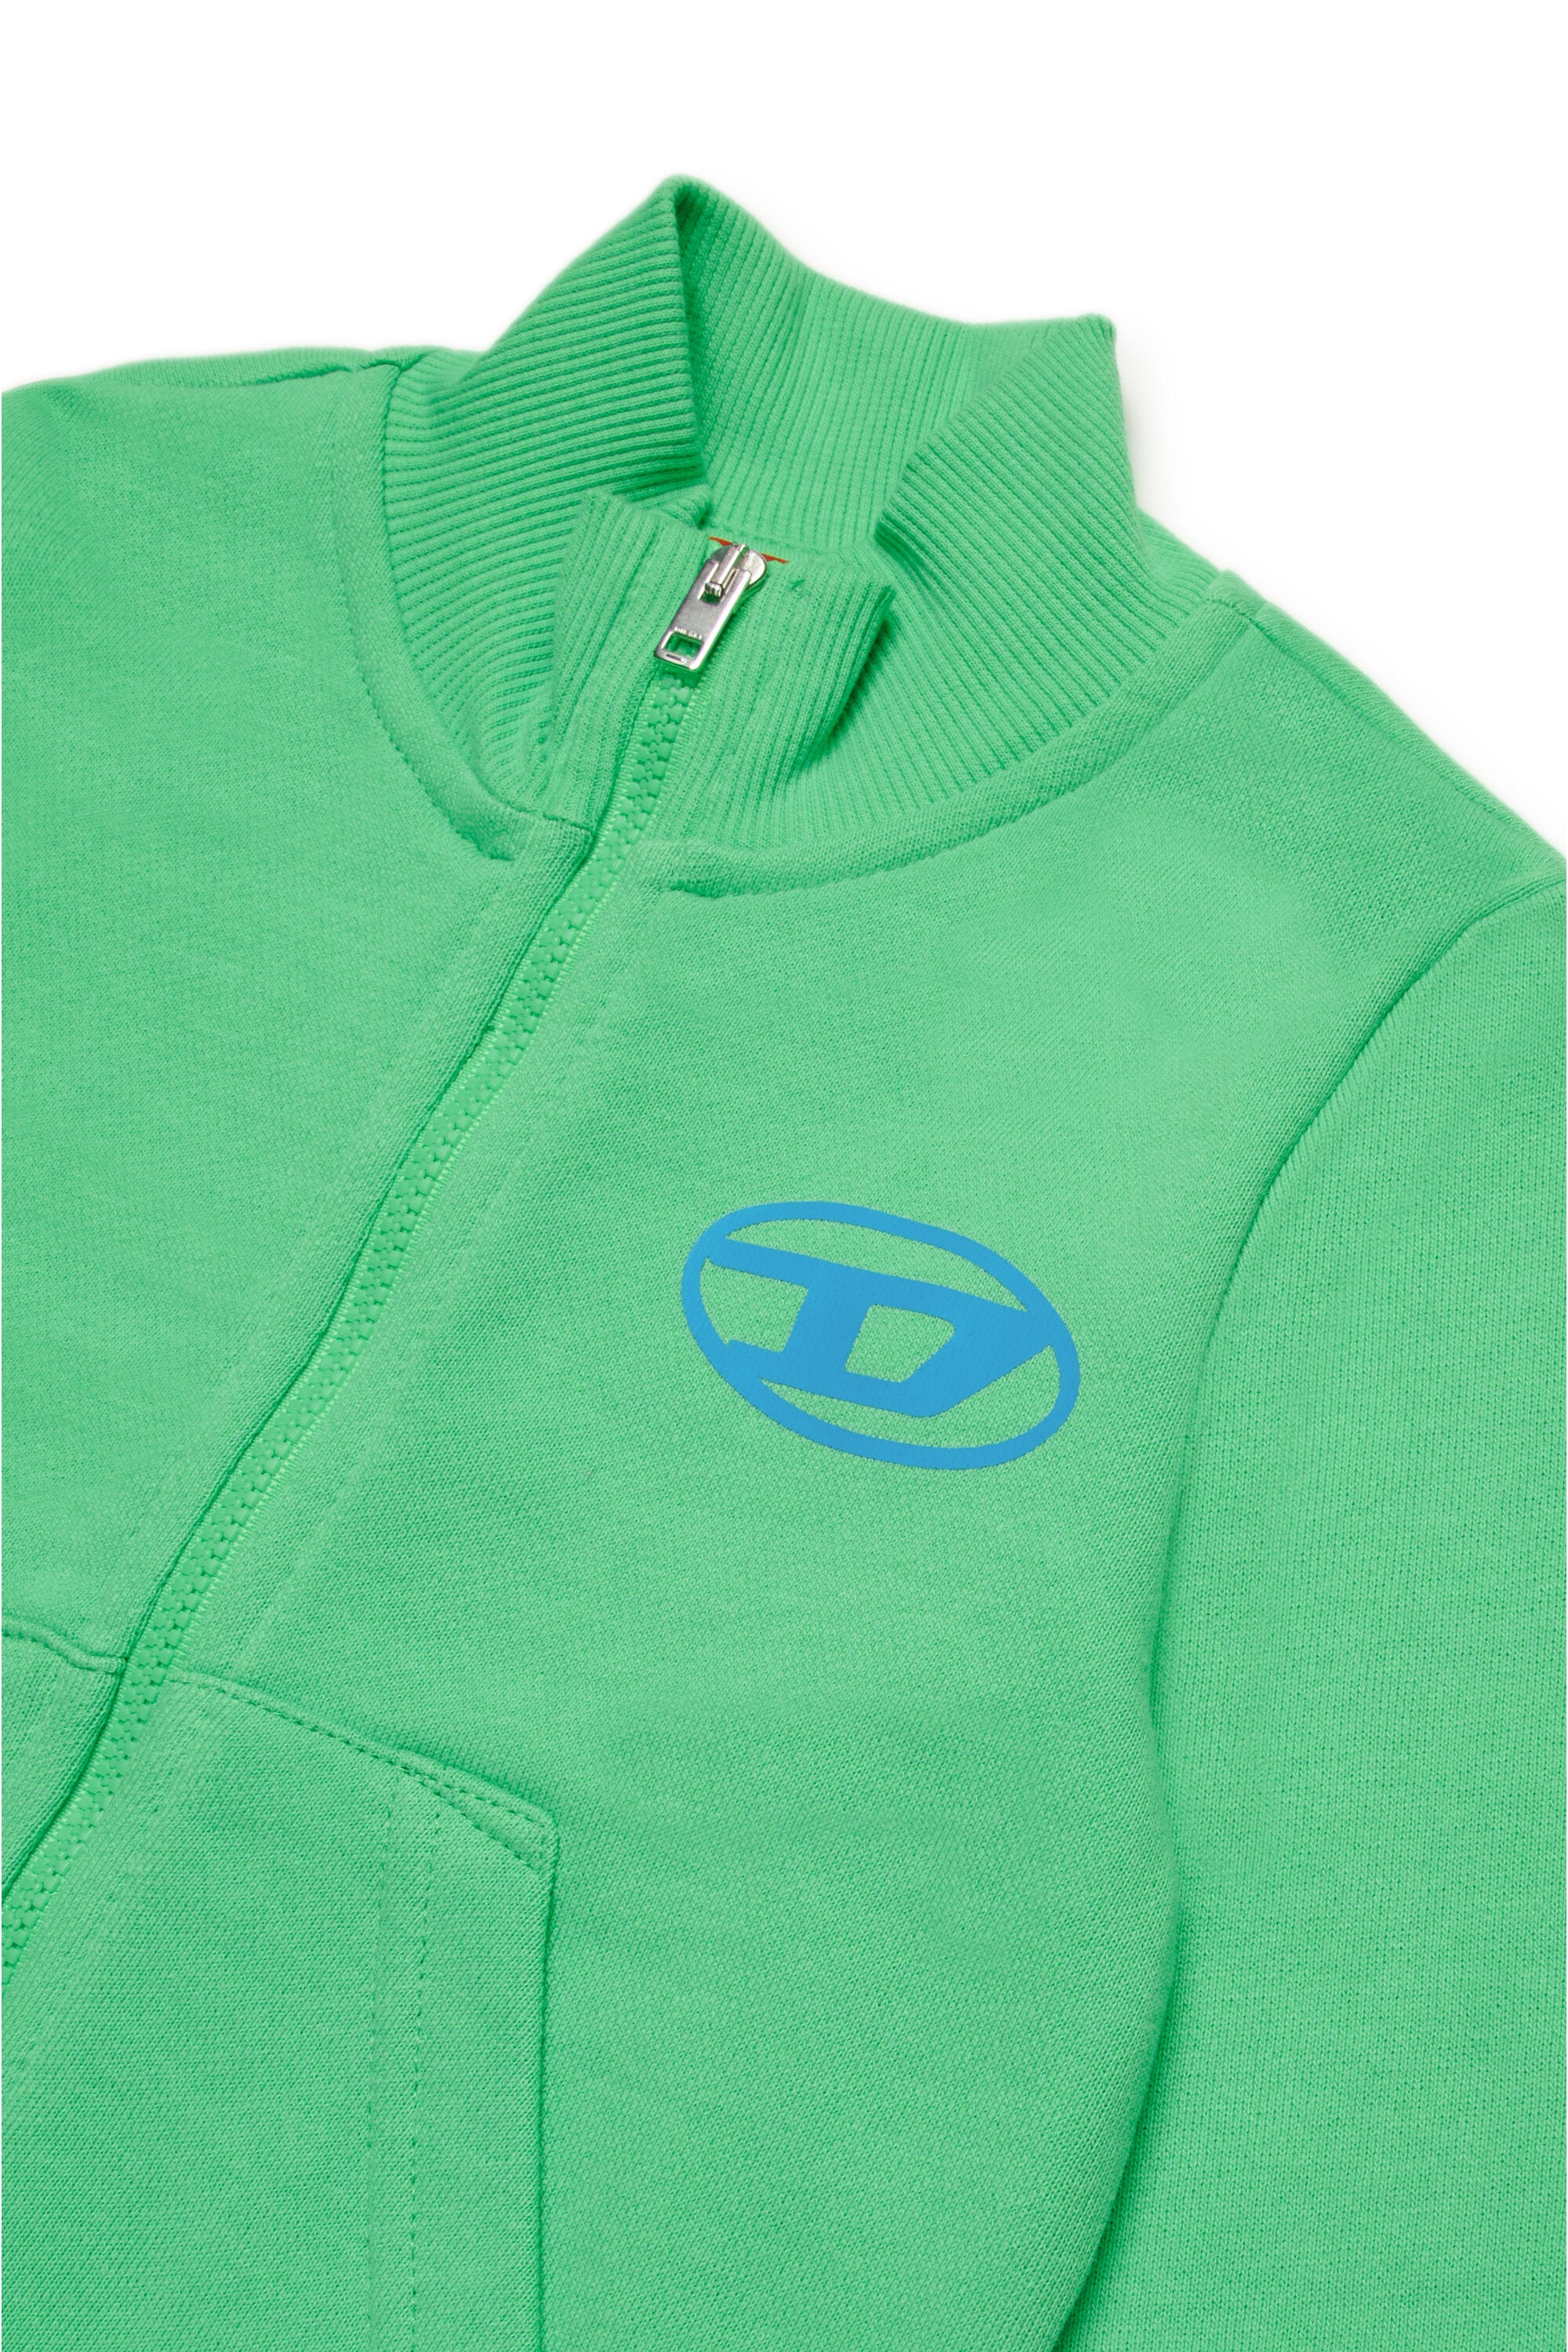 Sweatshirt with zip and Oval D logo